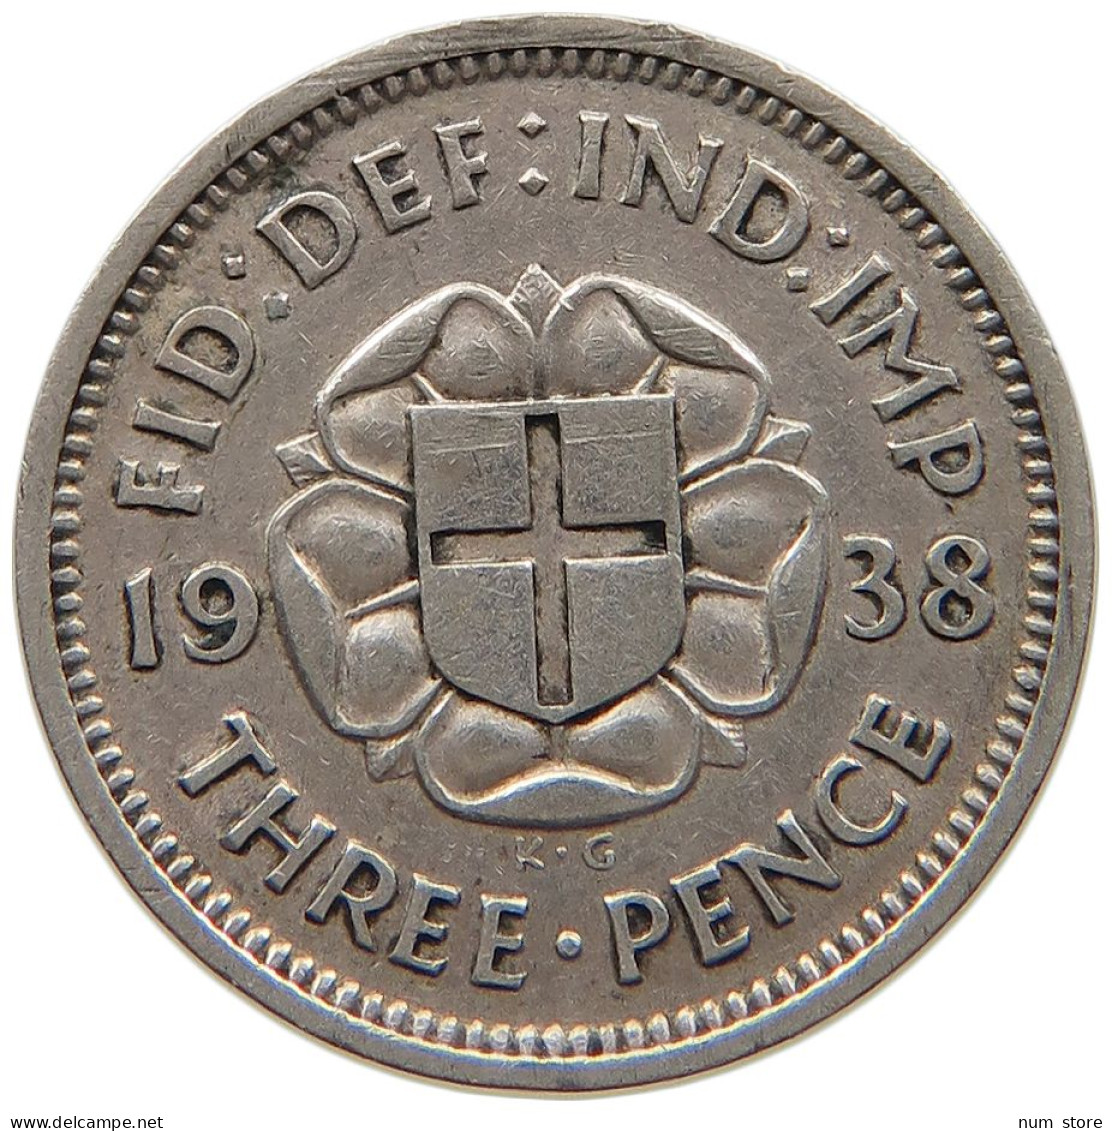 GREAT BRITAIN THREE PENCE 1938 #c015 0203 - F. 3 Pence